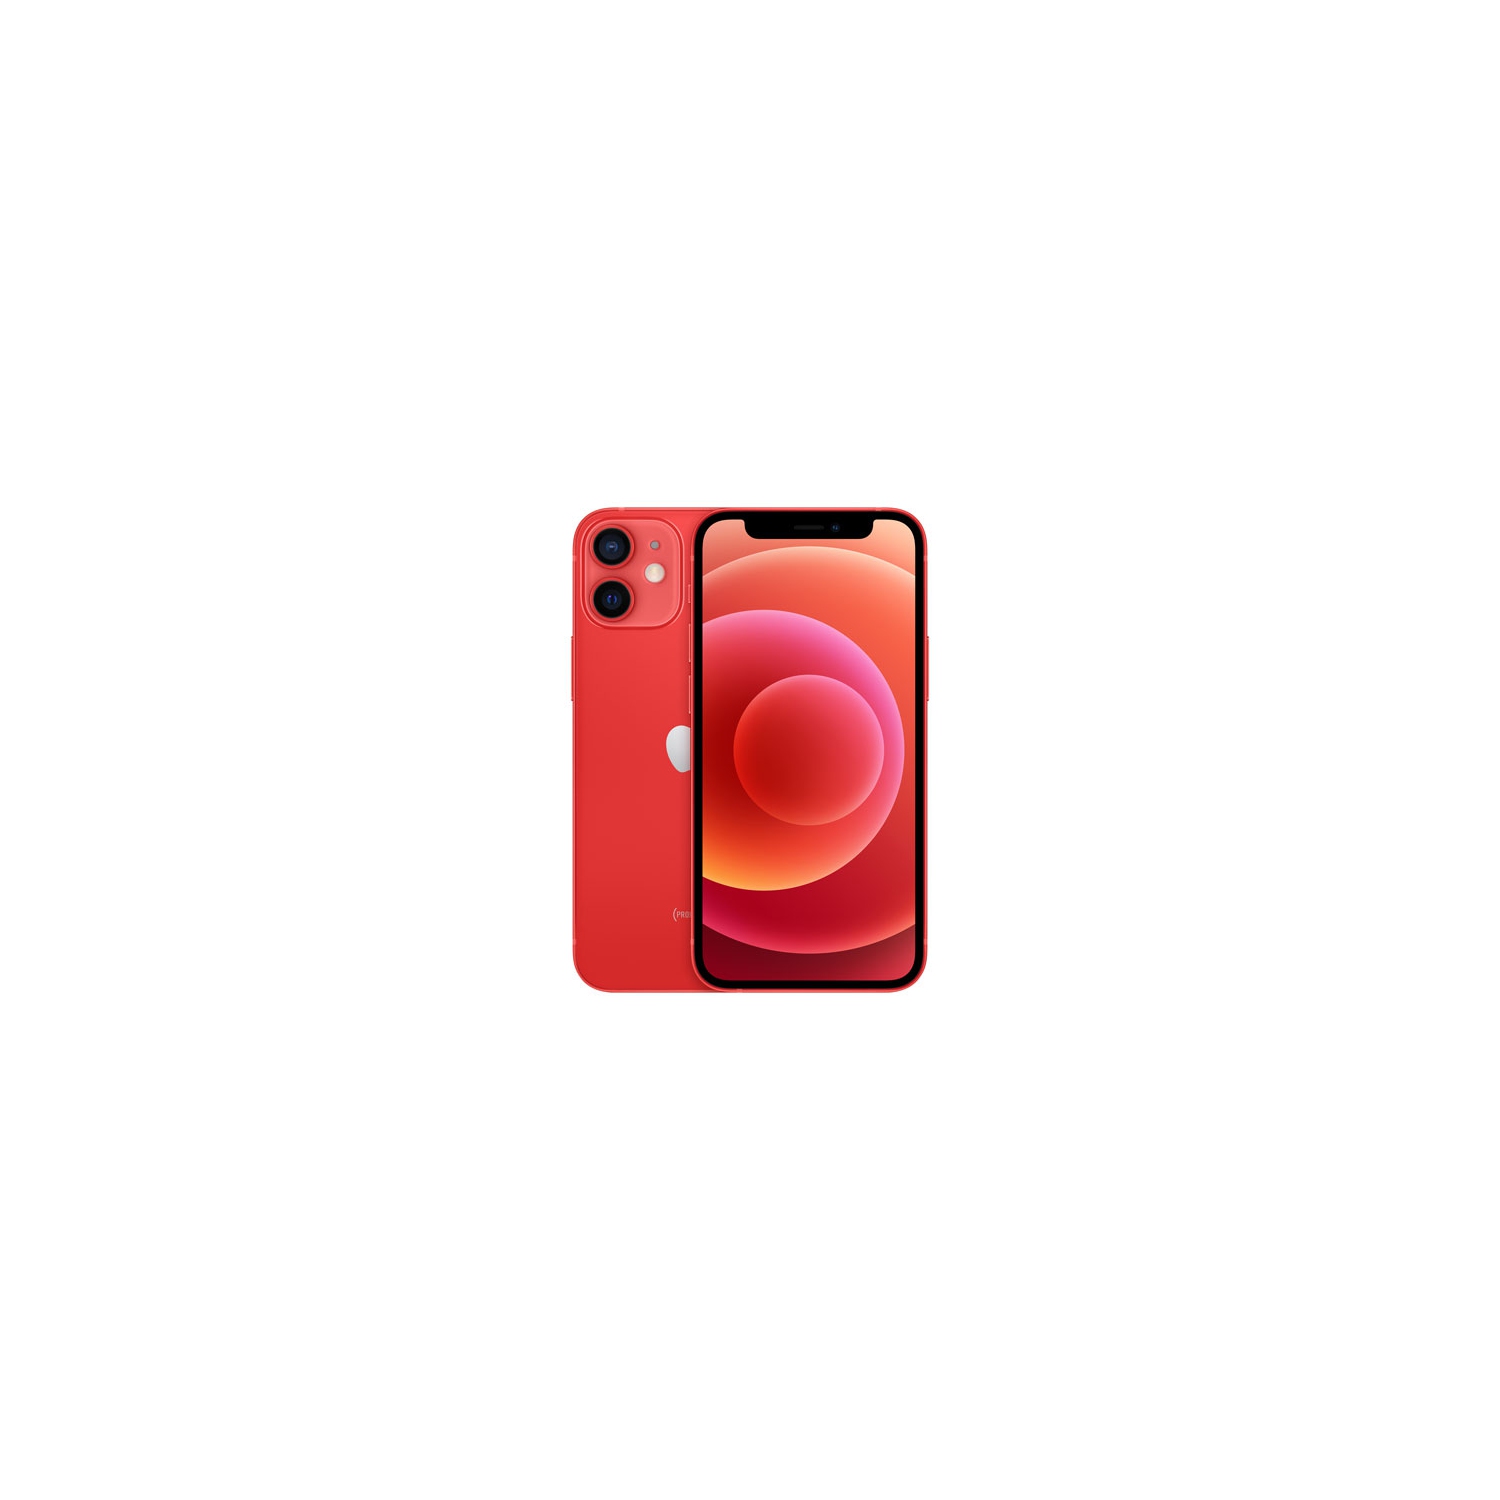 Refurbished (Good) - Apple iPhone 12 mini 128GB Smartphone - (PRODUCT) RED - Unlocked